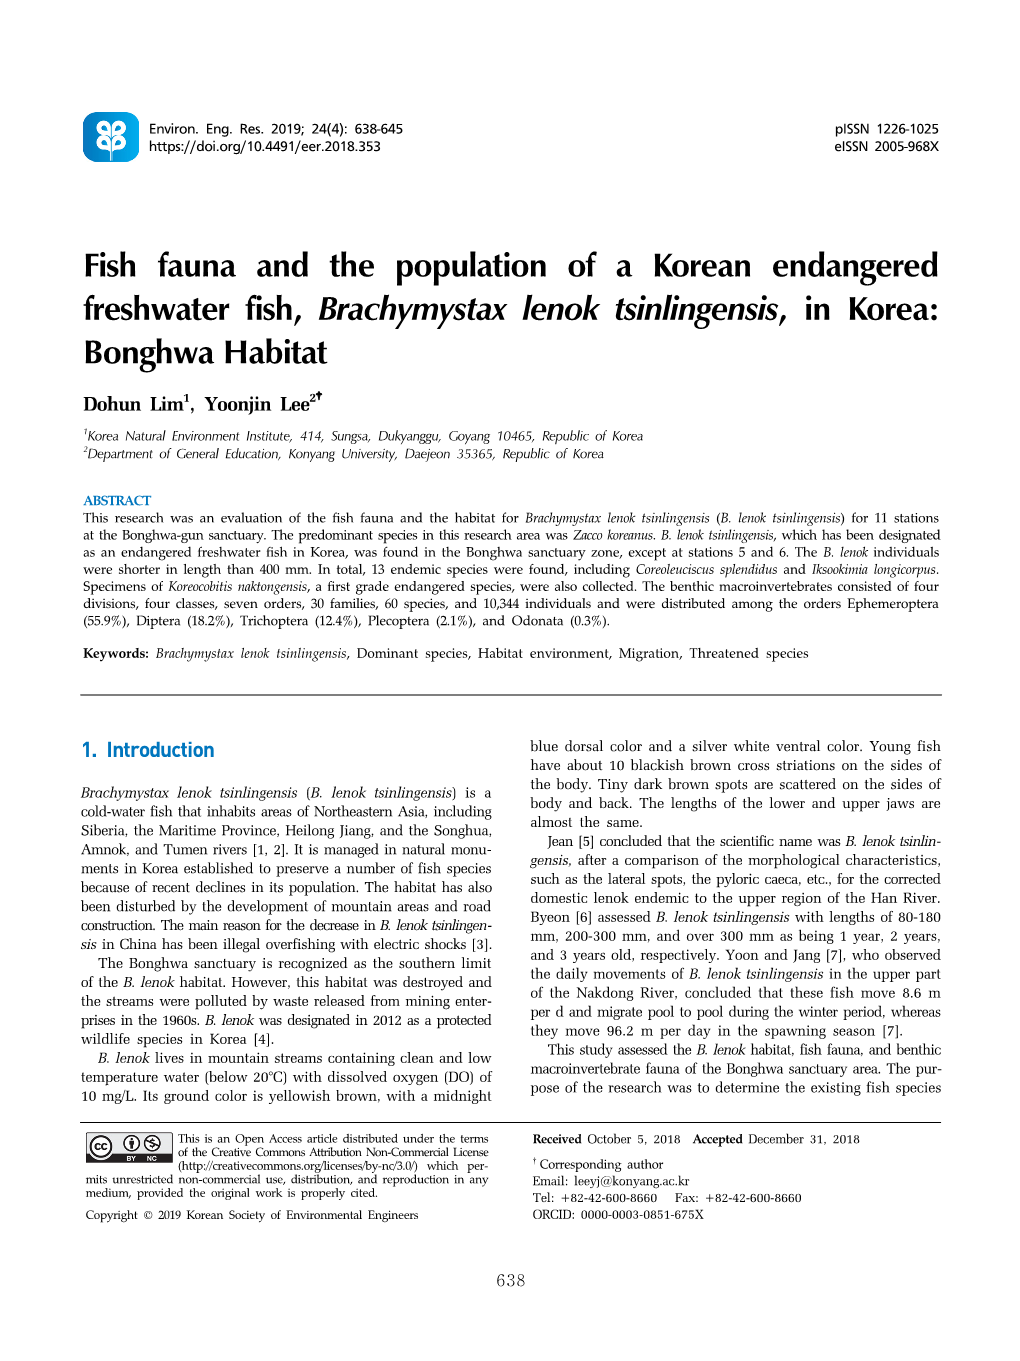 Fish Fauna and the Population of a Korean Endangered Freshwater Fish, Brachymystax Lenok Tsinlingensis, in Korea: Bonghwa Habitat